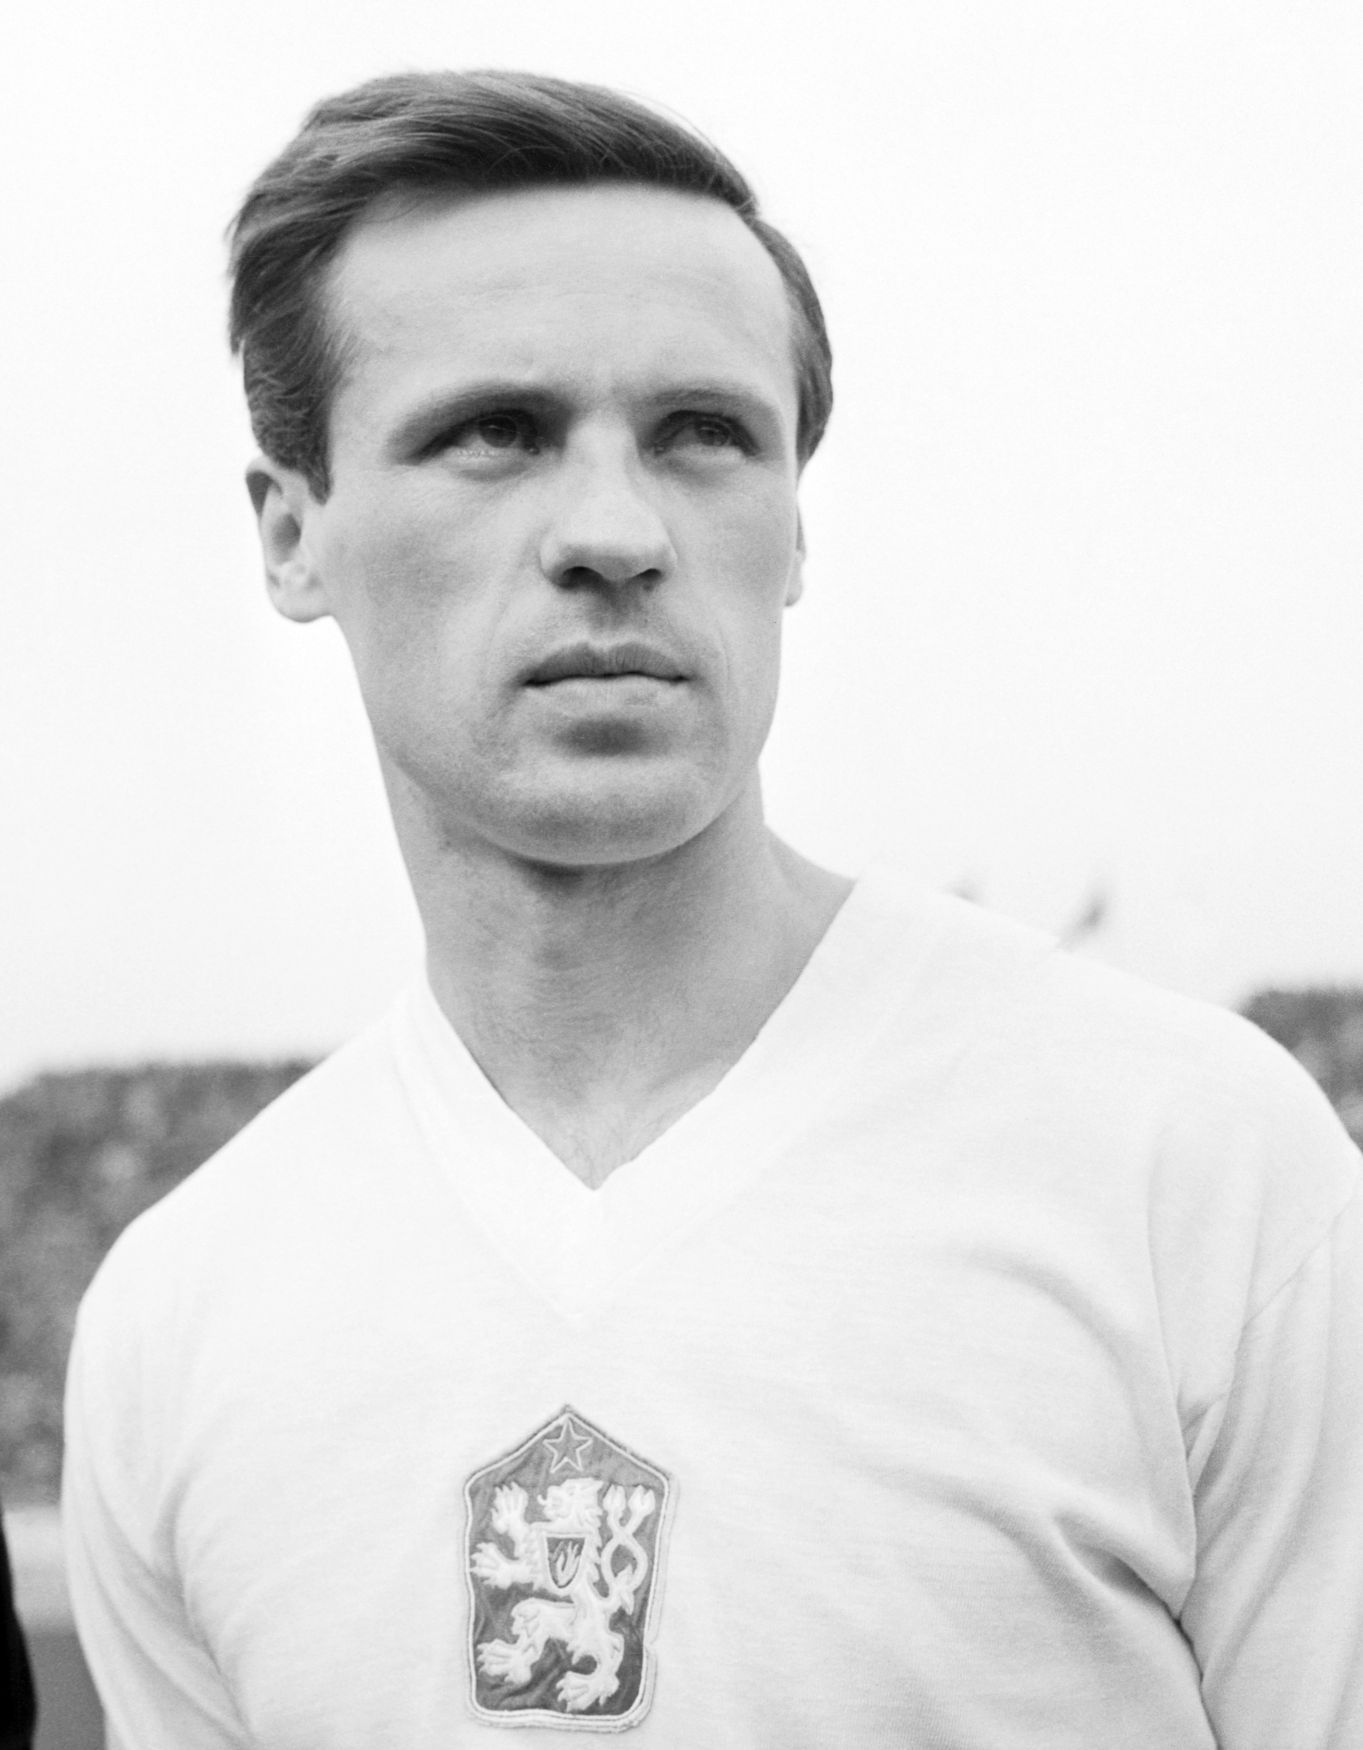 Titus Buberník v roce 1962